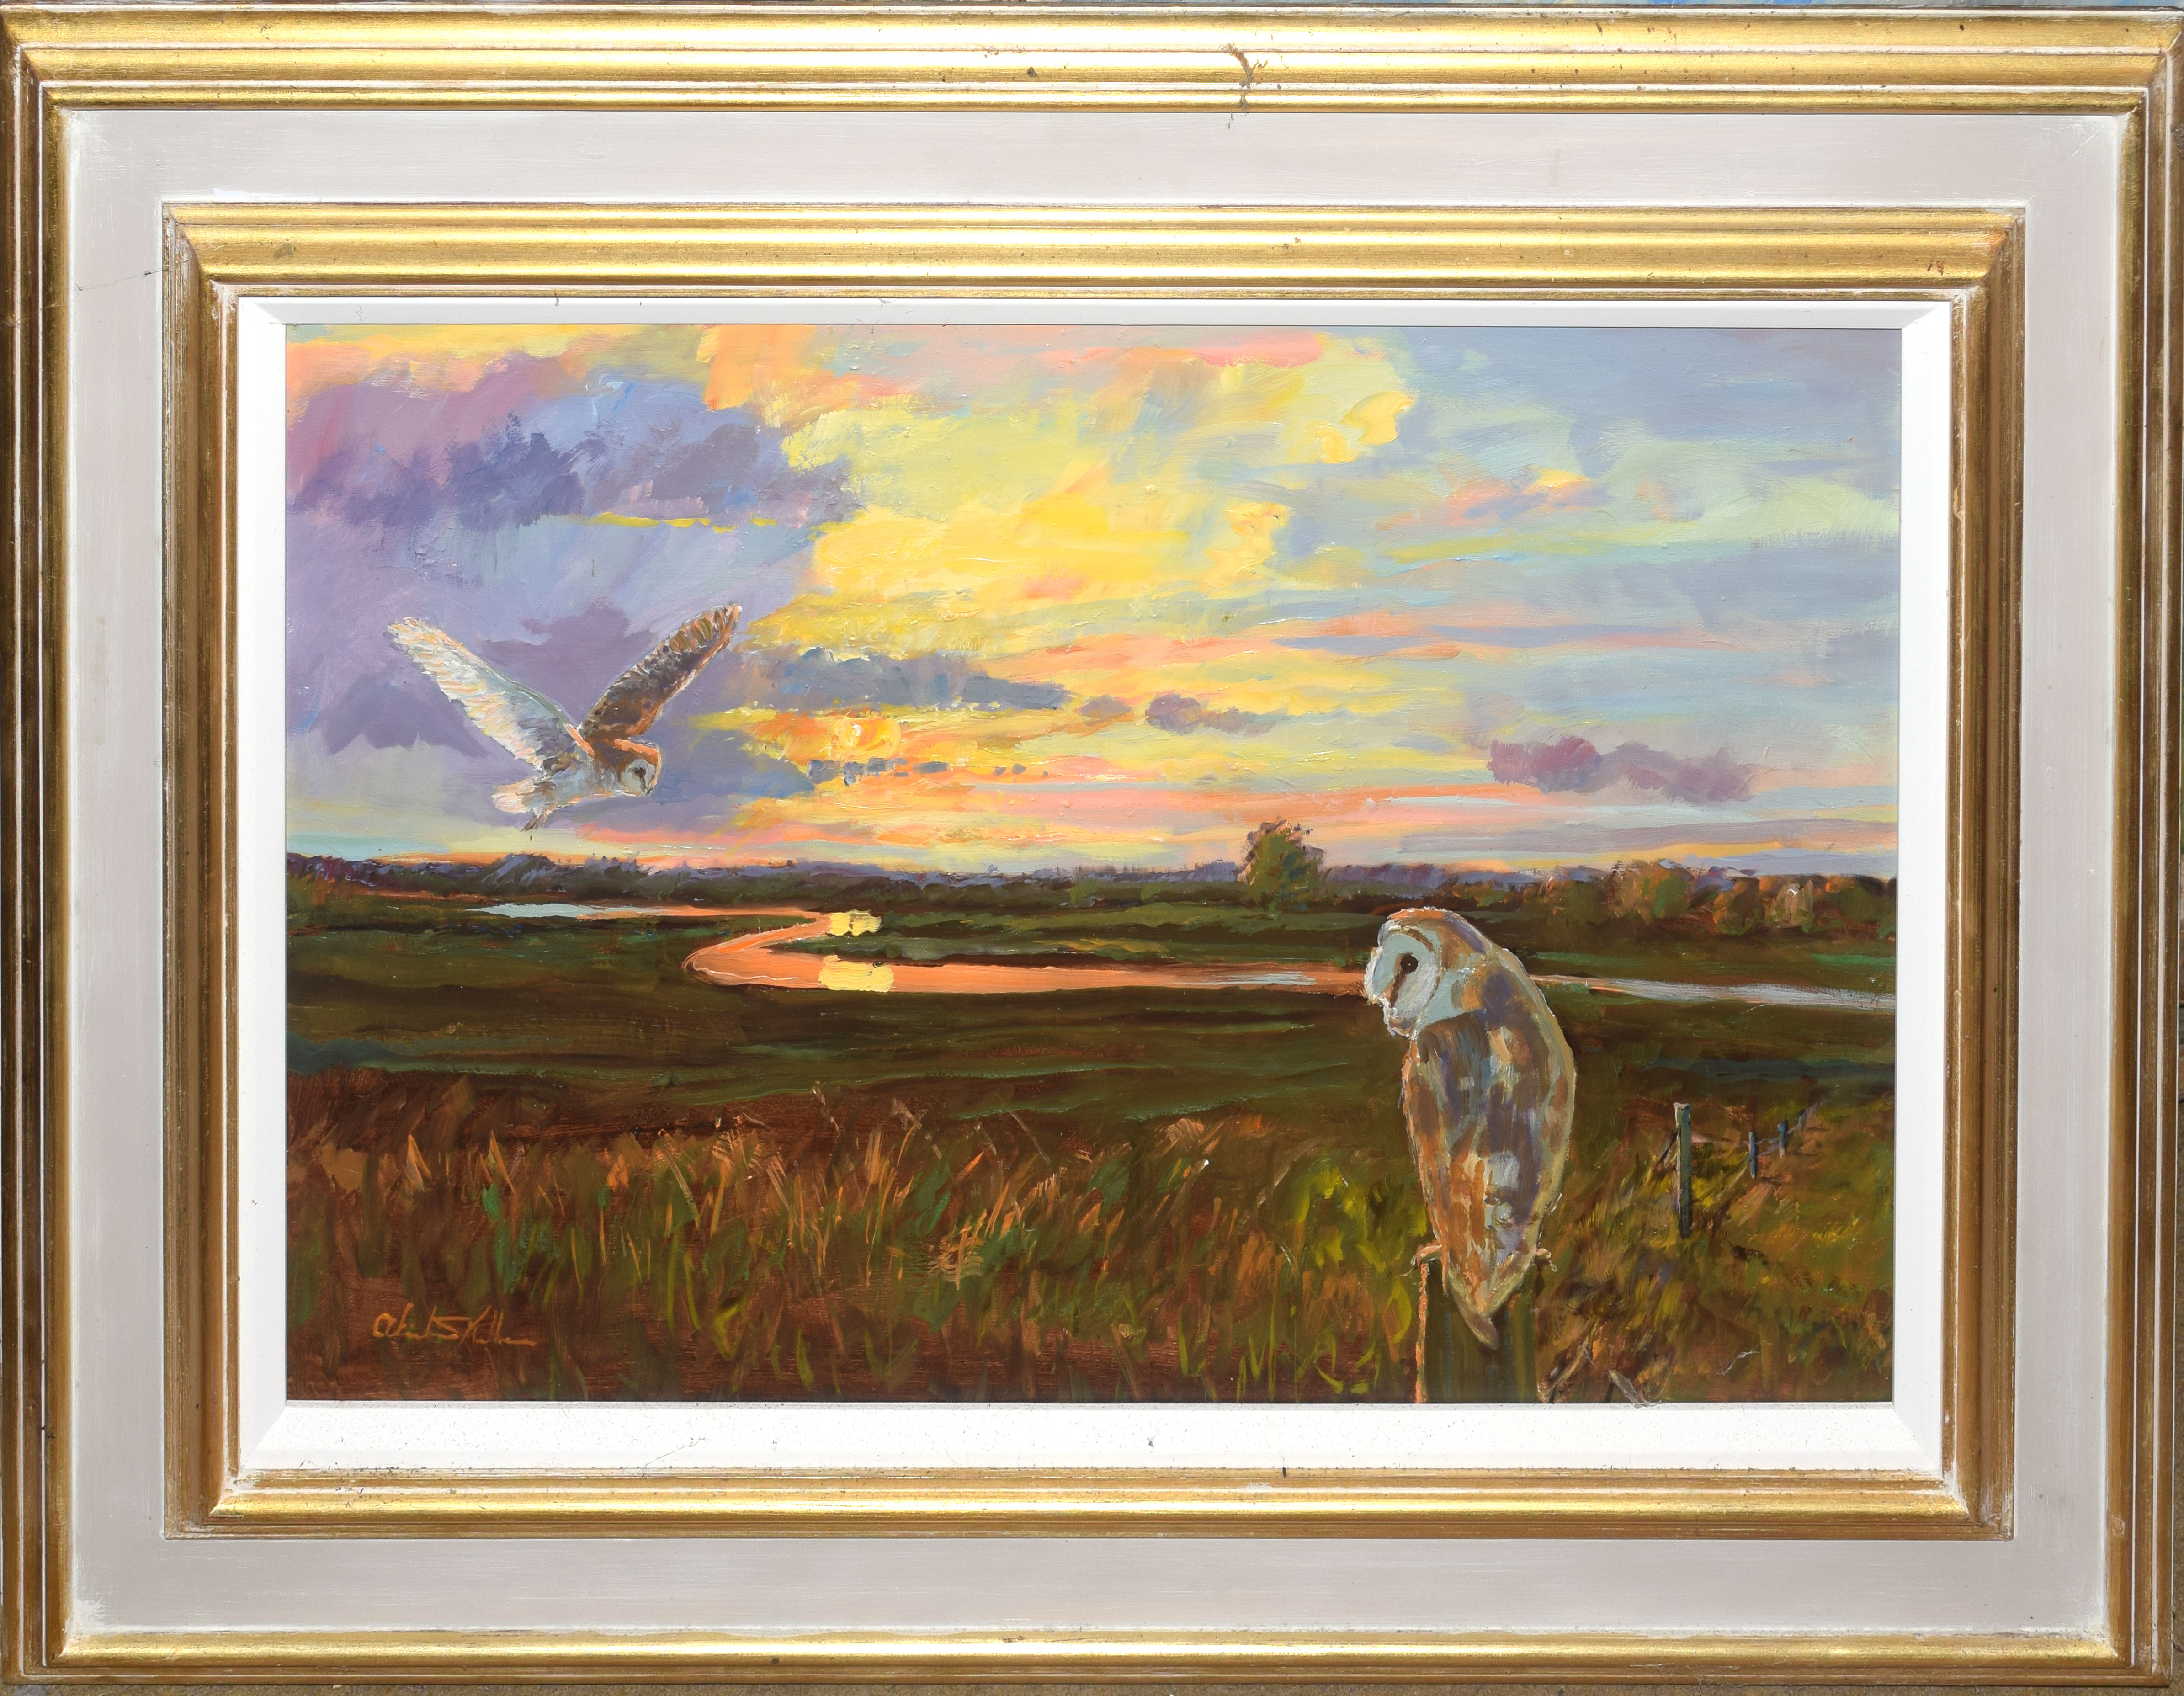 Alistair Kilburn, "Barn Owls at Dusk", oil on board, signed lower left, 38 x 58cm